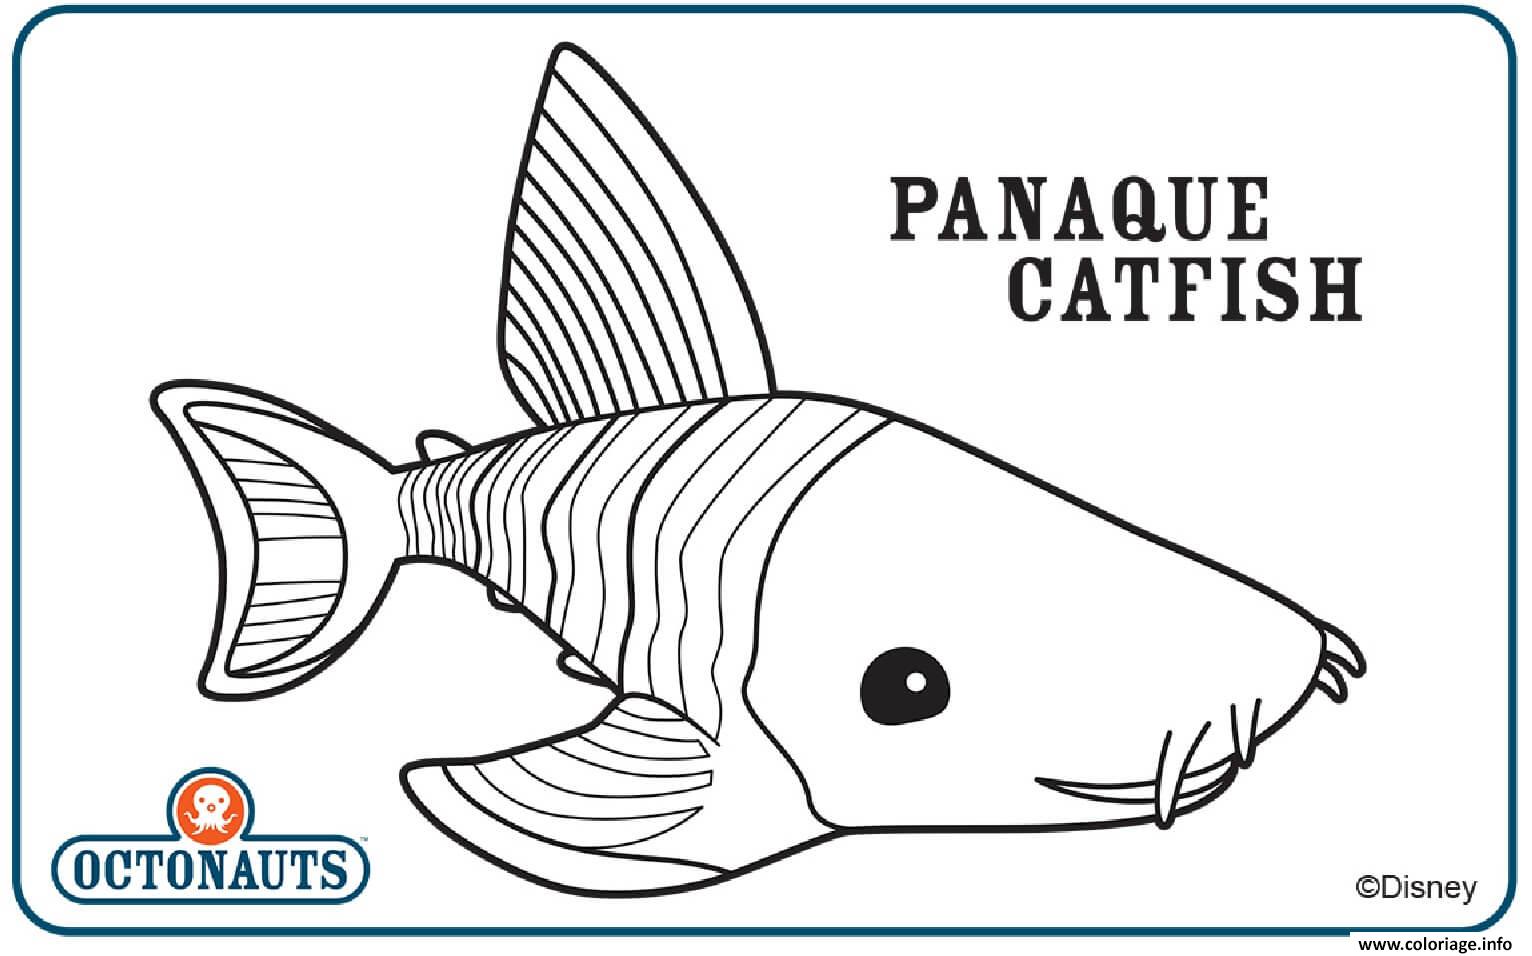 Dessin panaque catfish octonaute creature Coloriage Gratuit à Imprimer